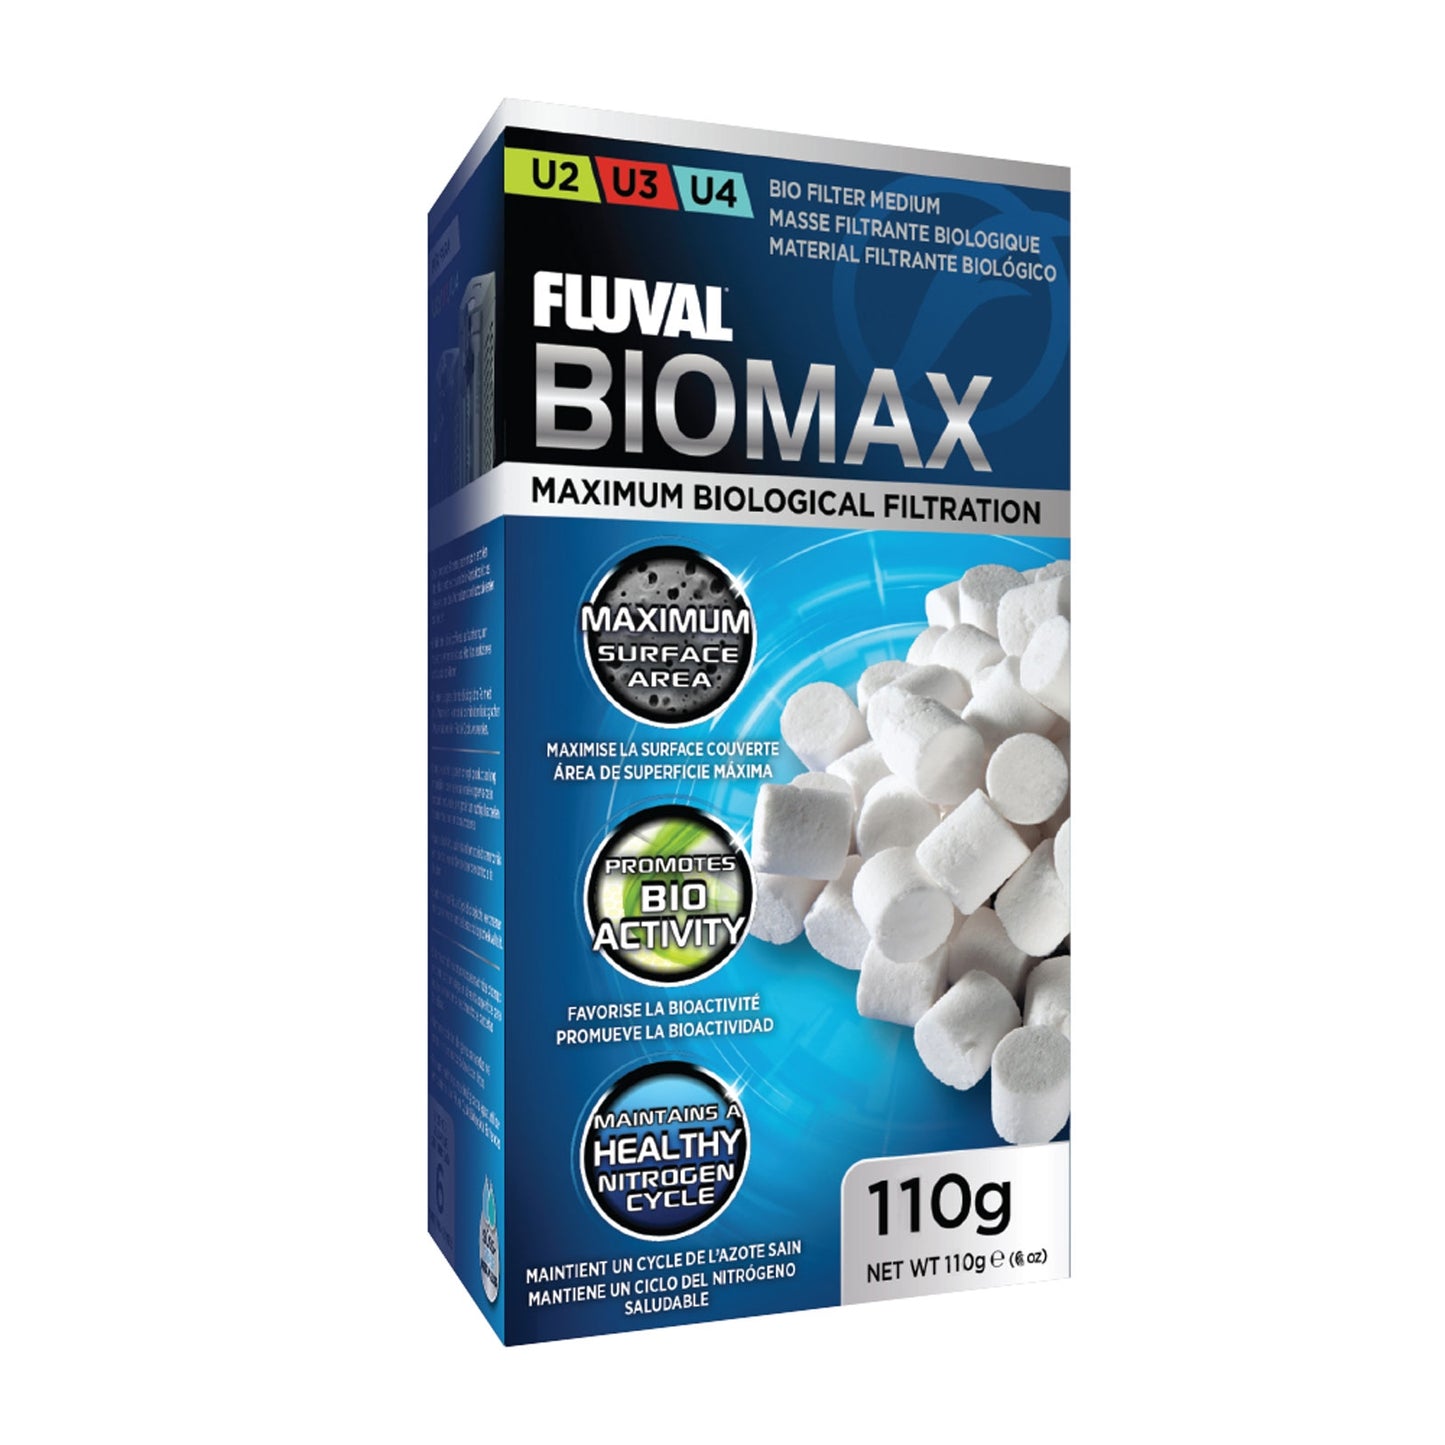 Fluval Biomax 110gm for U2,U3,U4